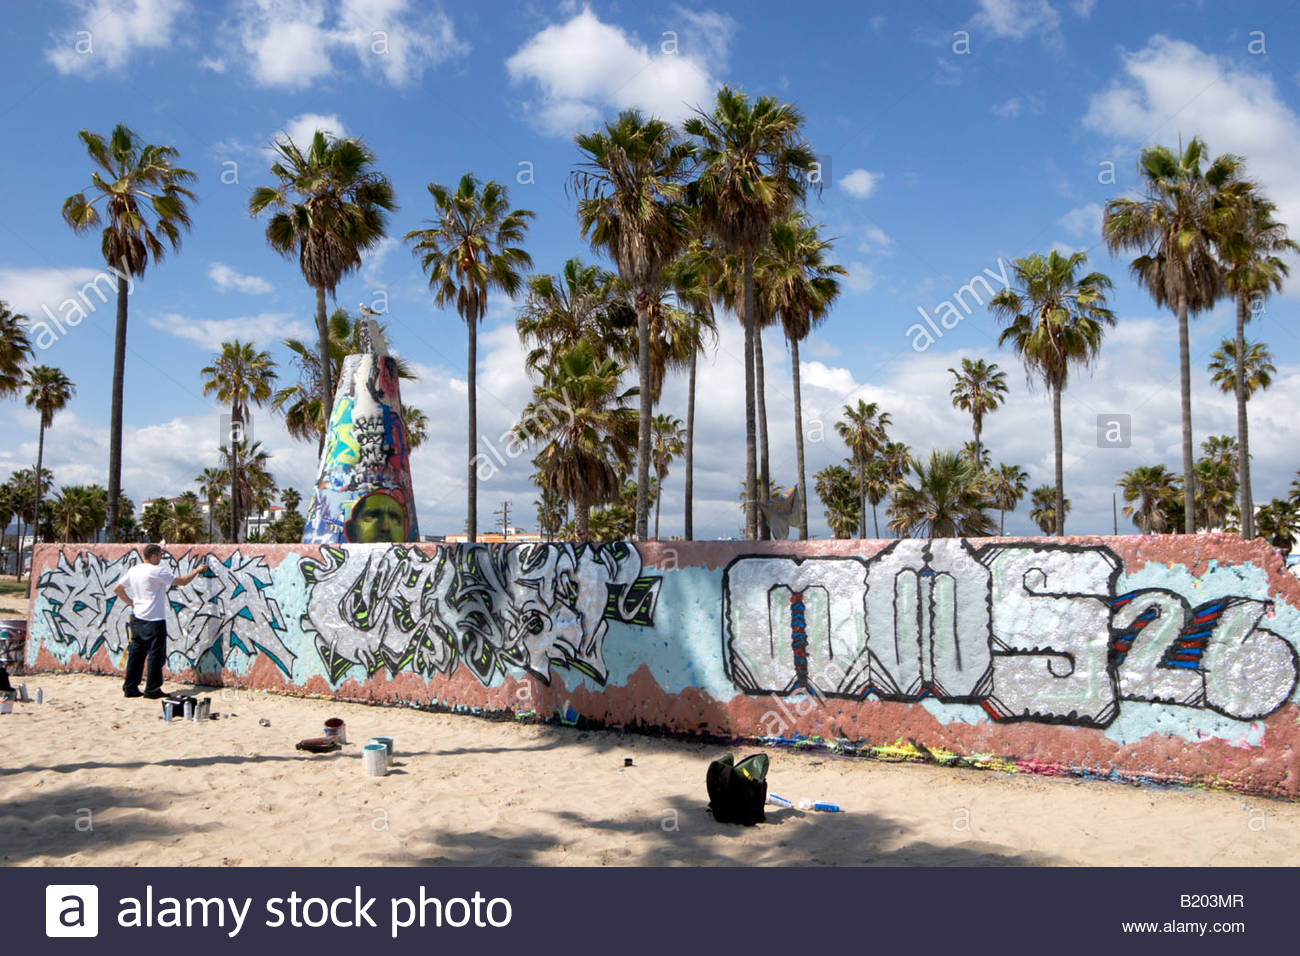 Legal Graffiti Stock Photos Image